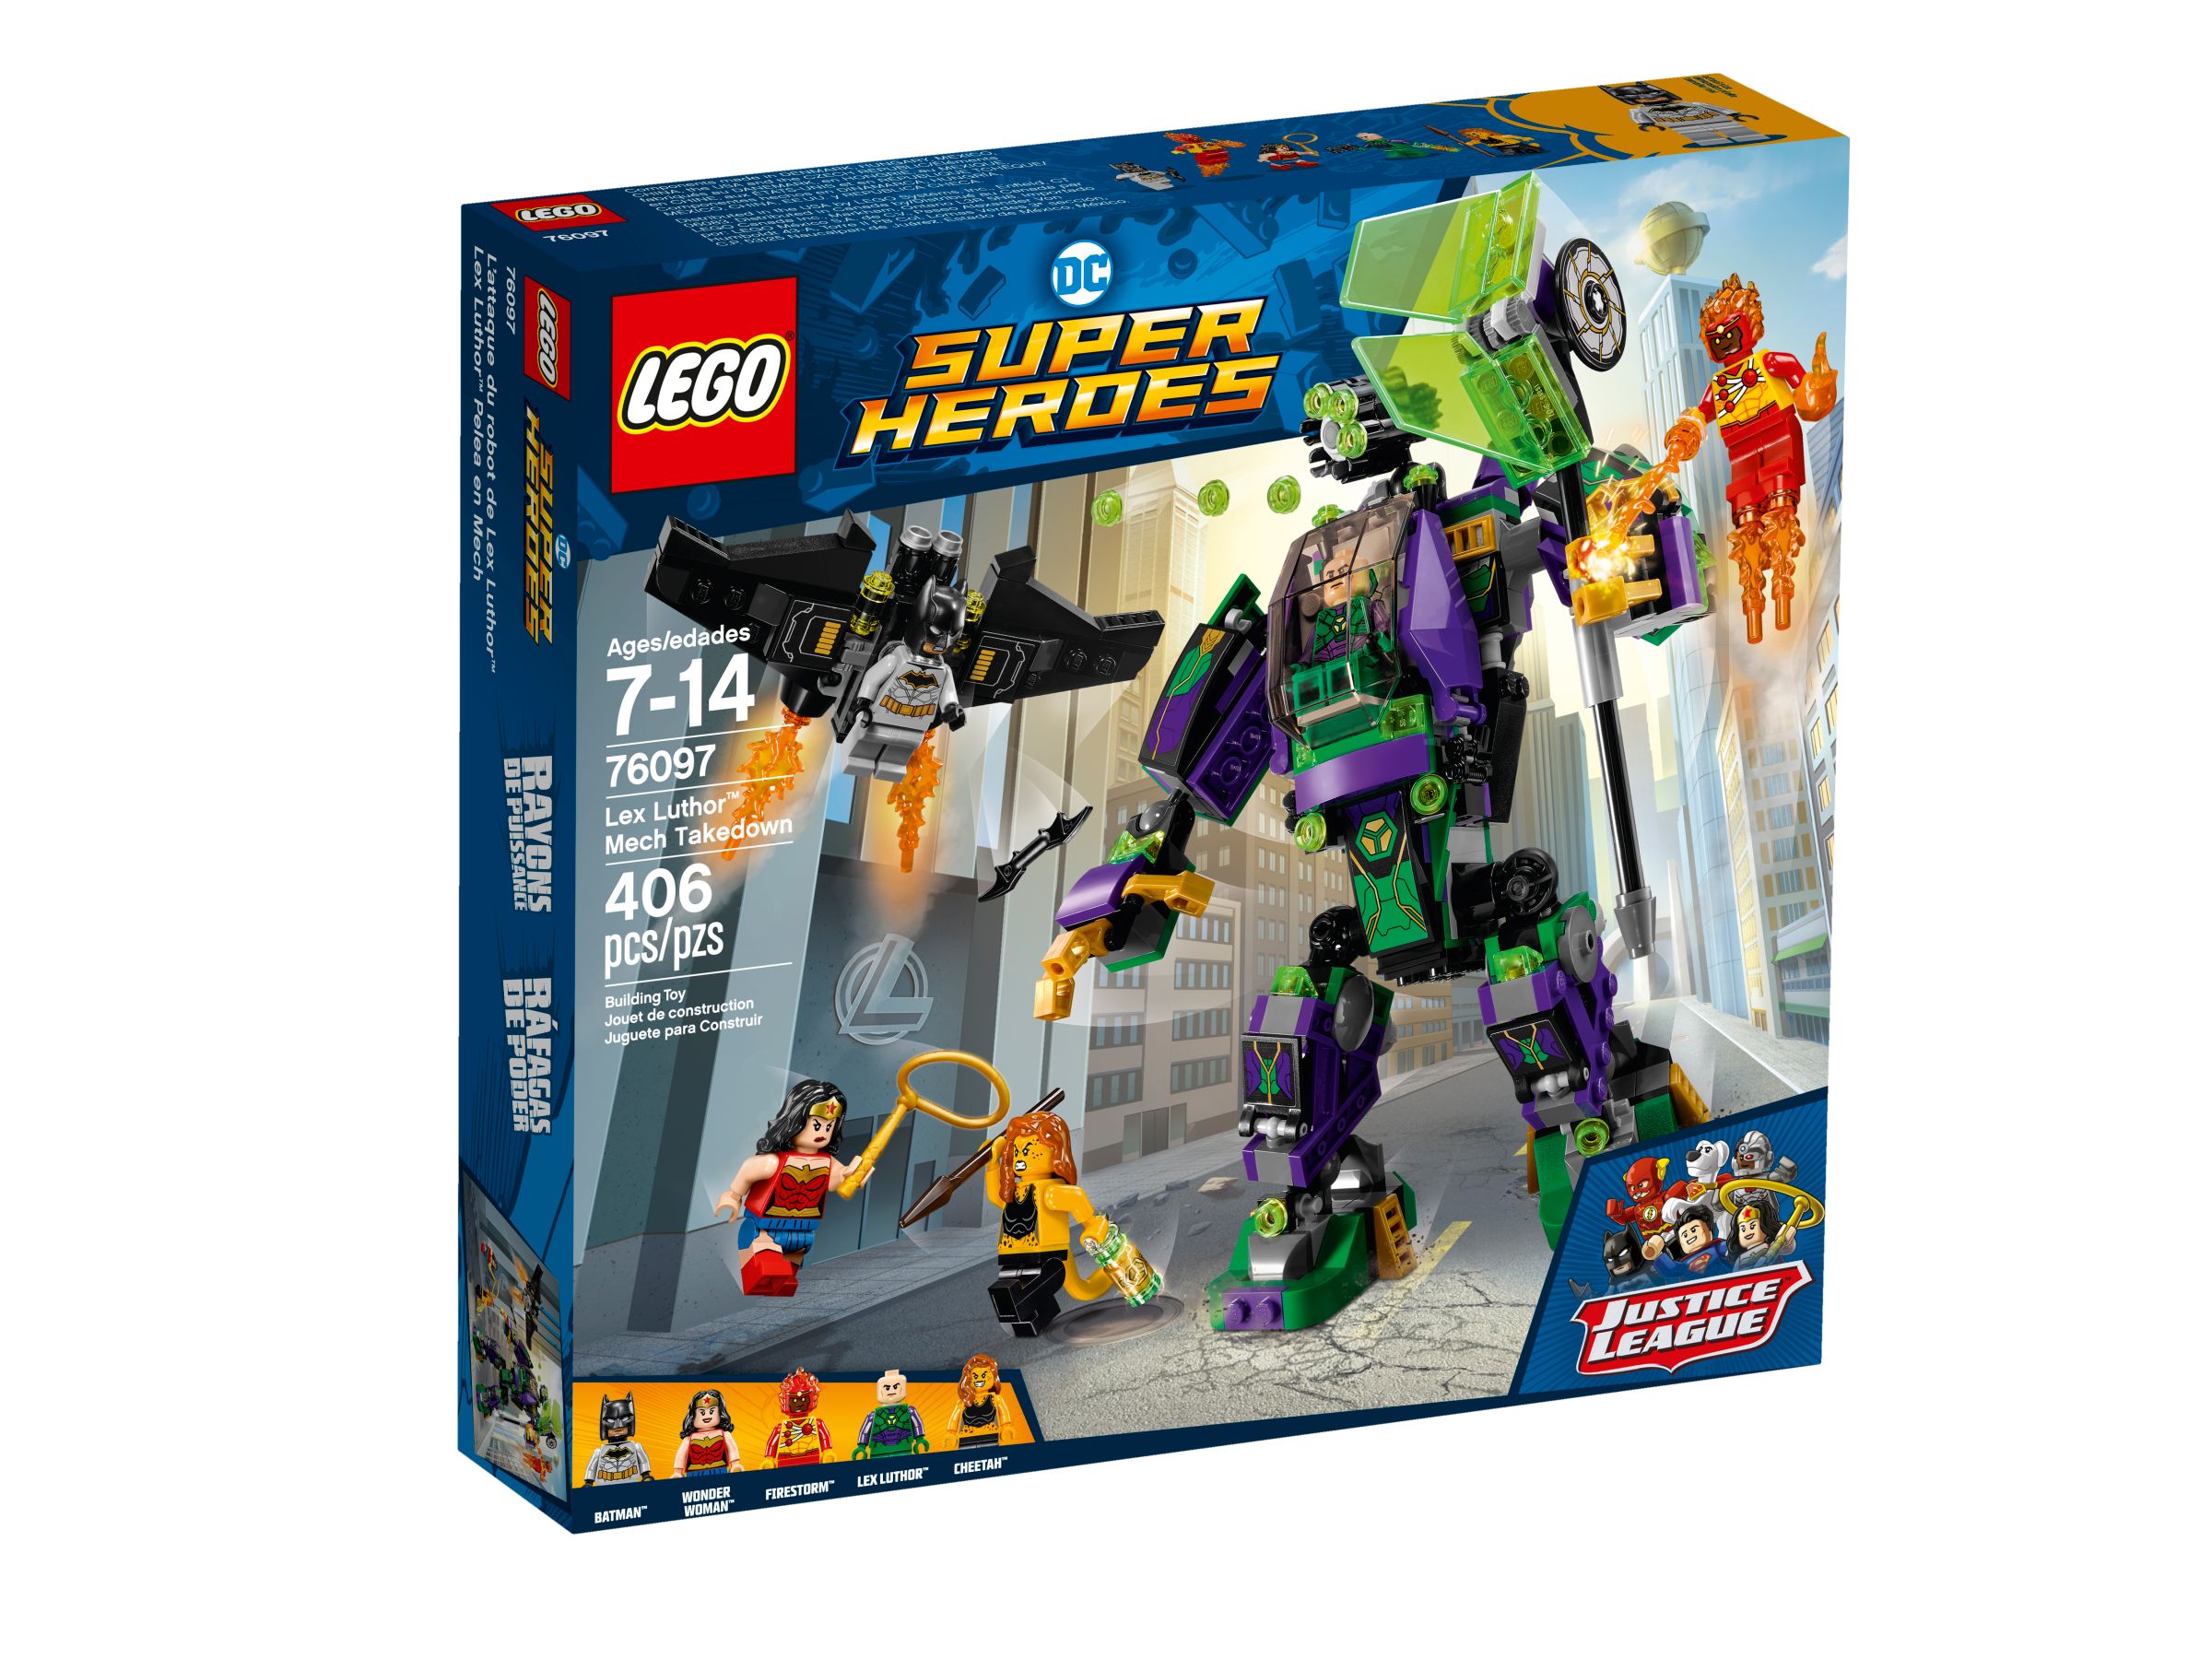 LEGO Super Heroes 76097 Lex Luthor Mech LEGO_76097_alt1.jpg